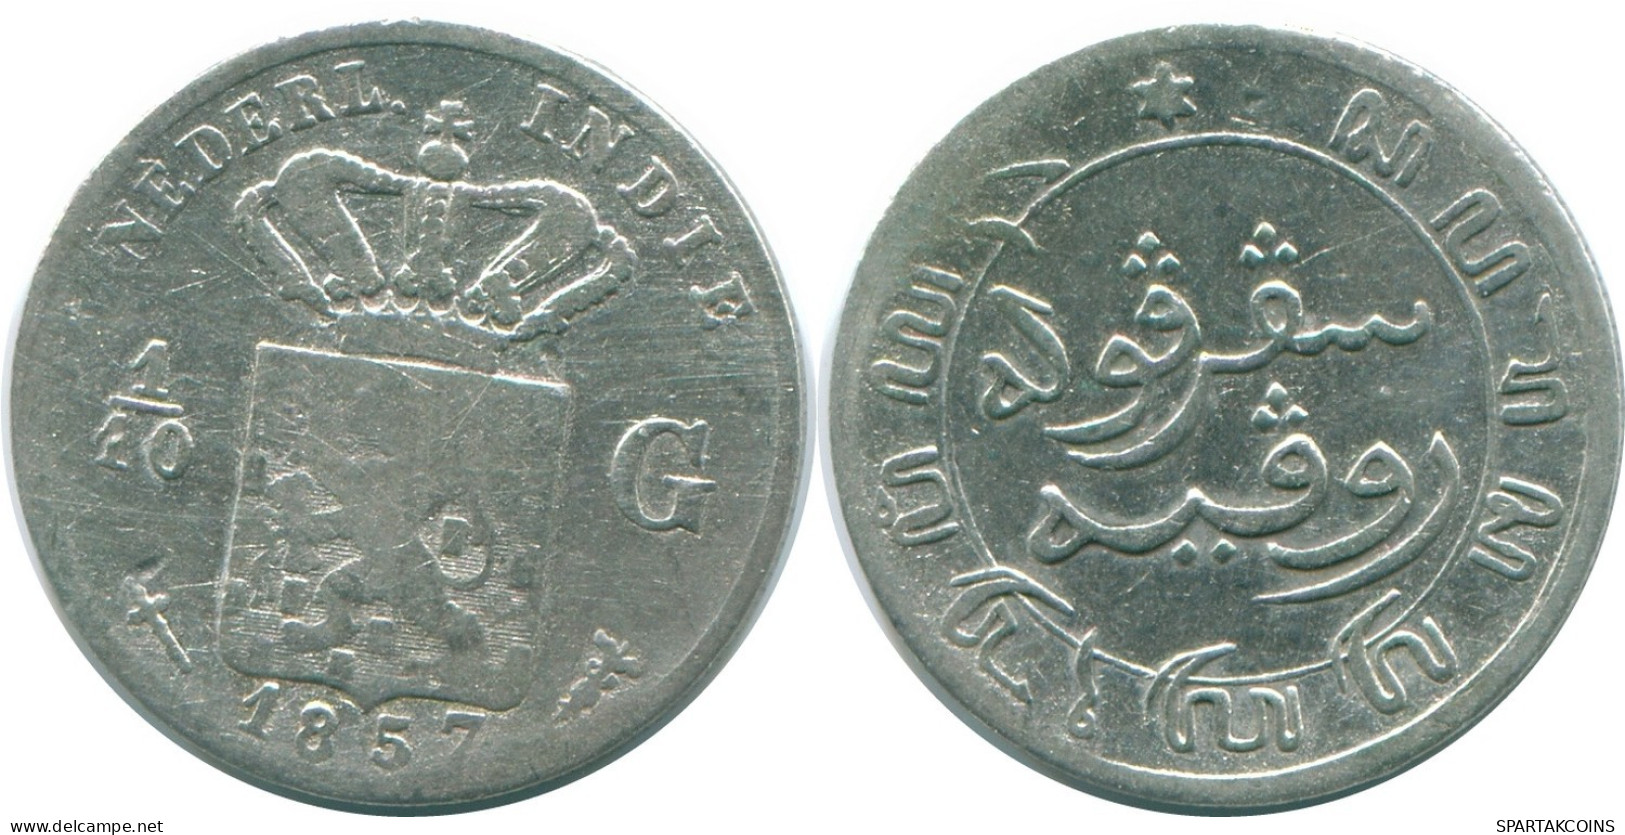 1/10 GULDEN 1857 NETHERLANDS EAST INDIES SILVER Colonial Coin #NL13147.3.U.A - Indes Néerlandaises